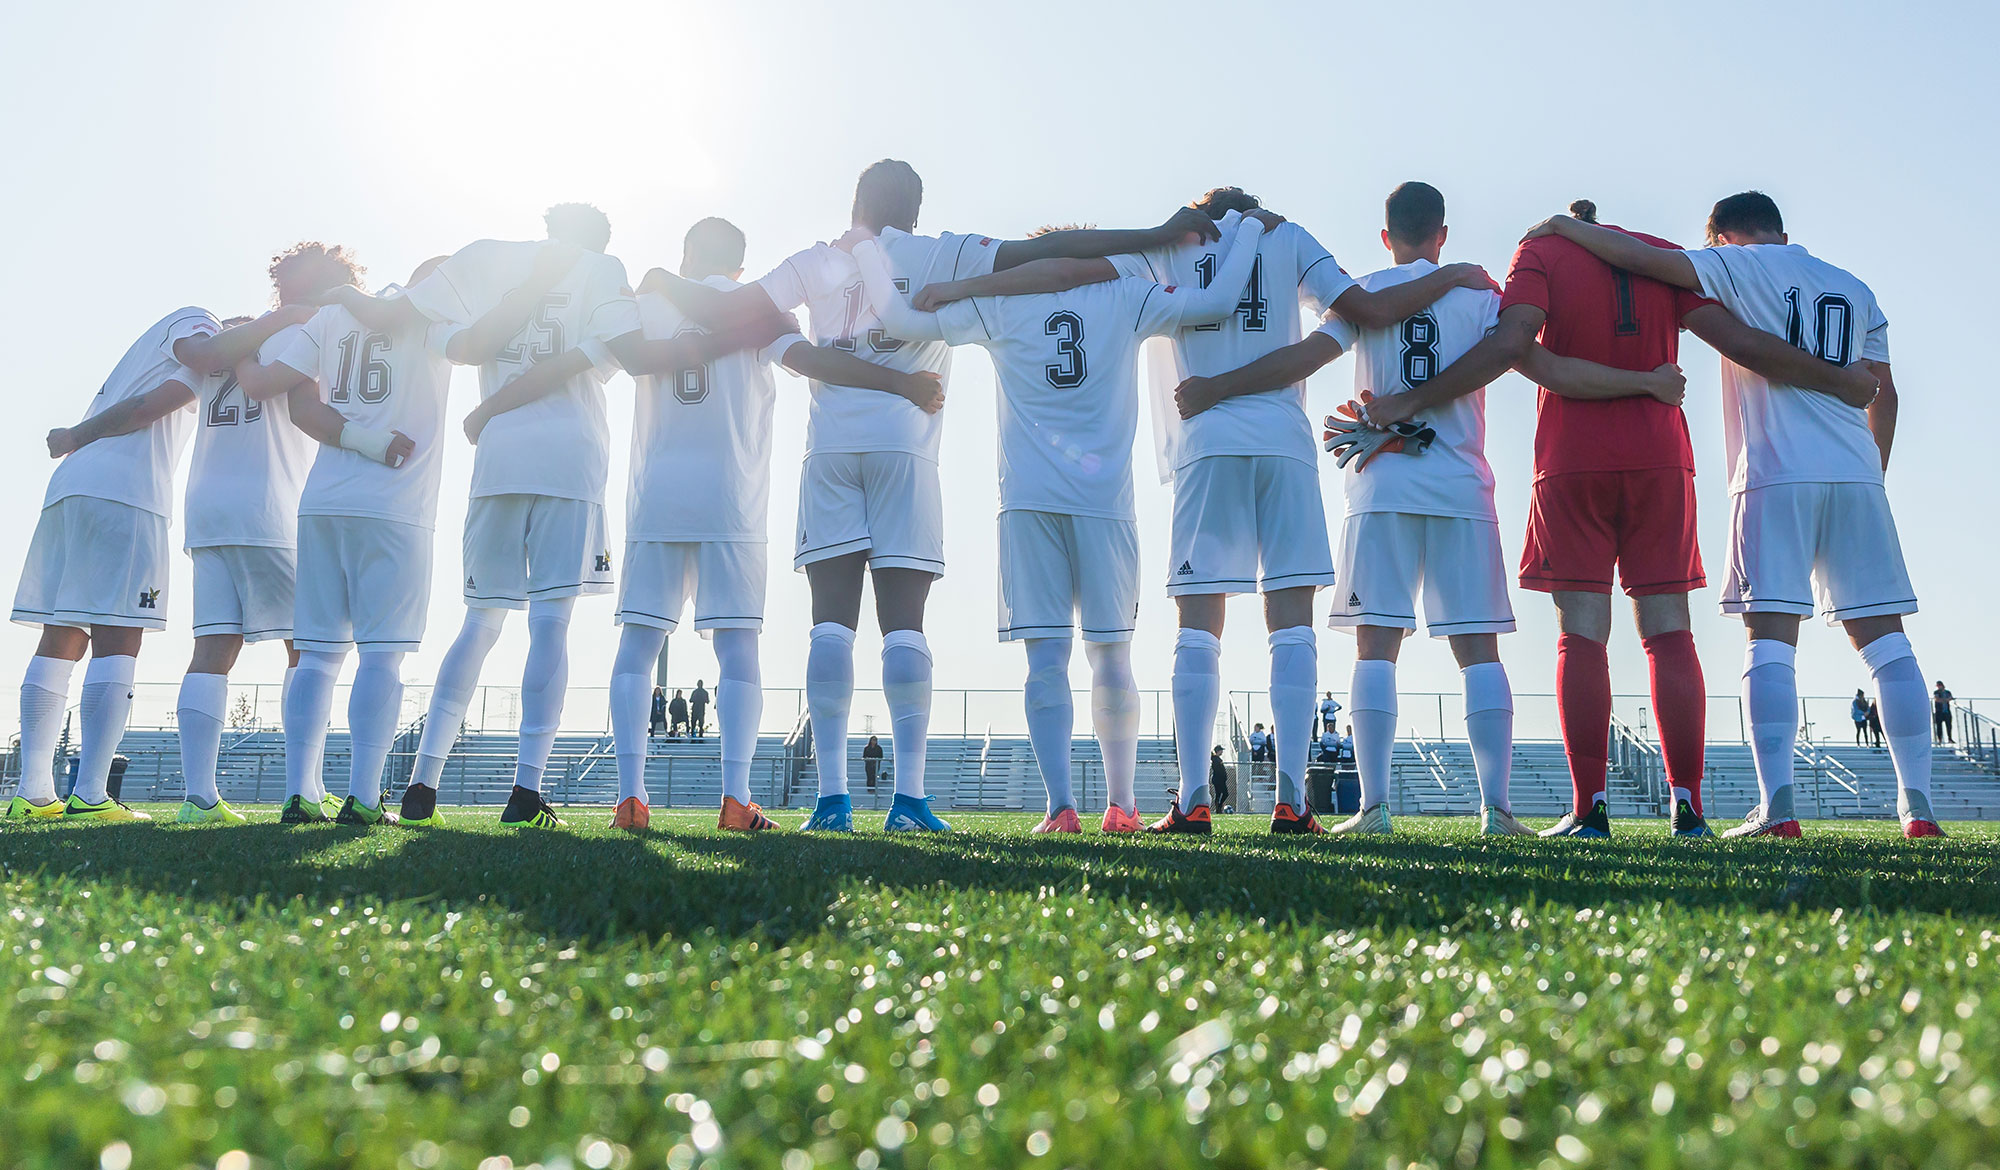 Men's soccer team lined up for the national anthem